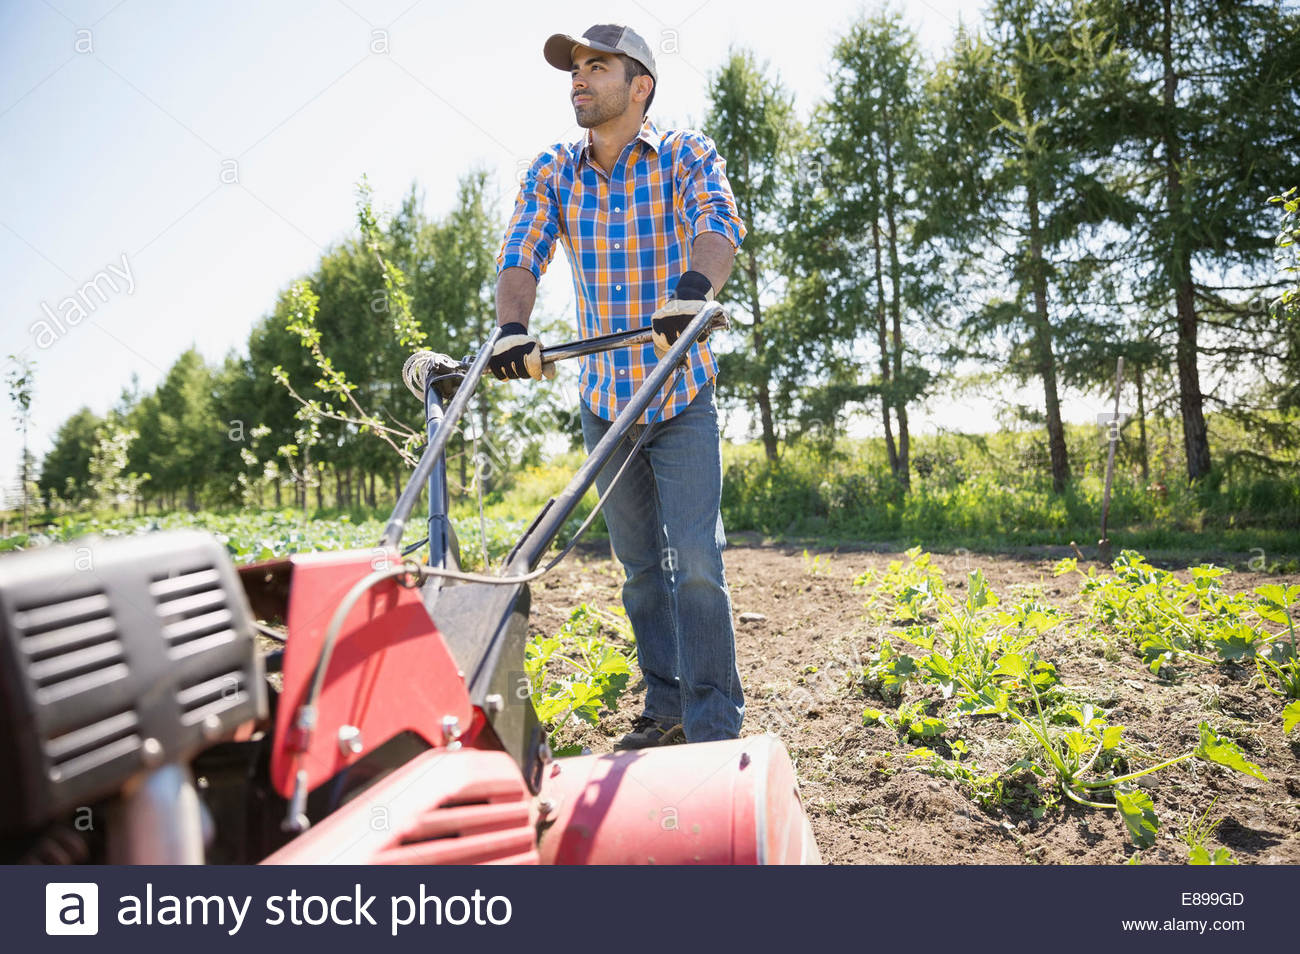 Man using rototiller in community garden Stock Photo